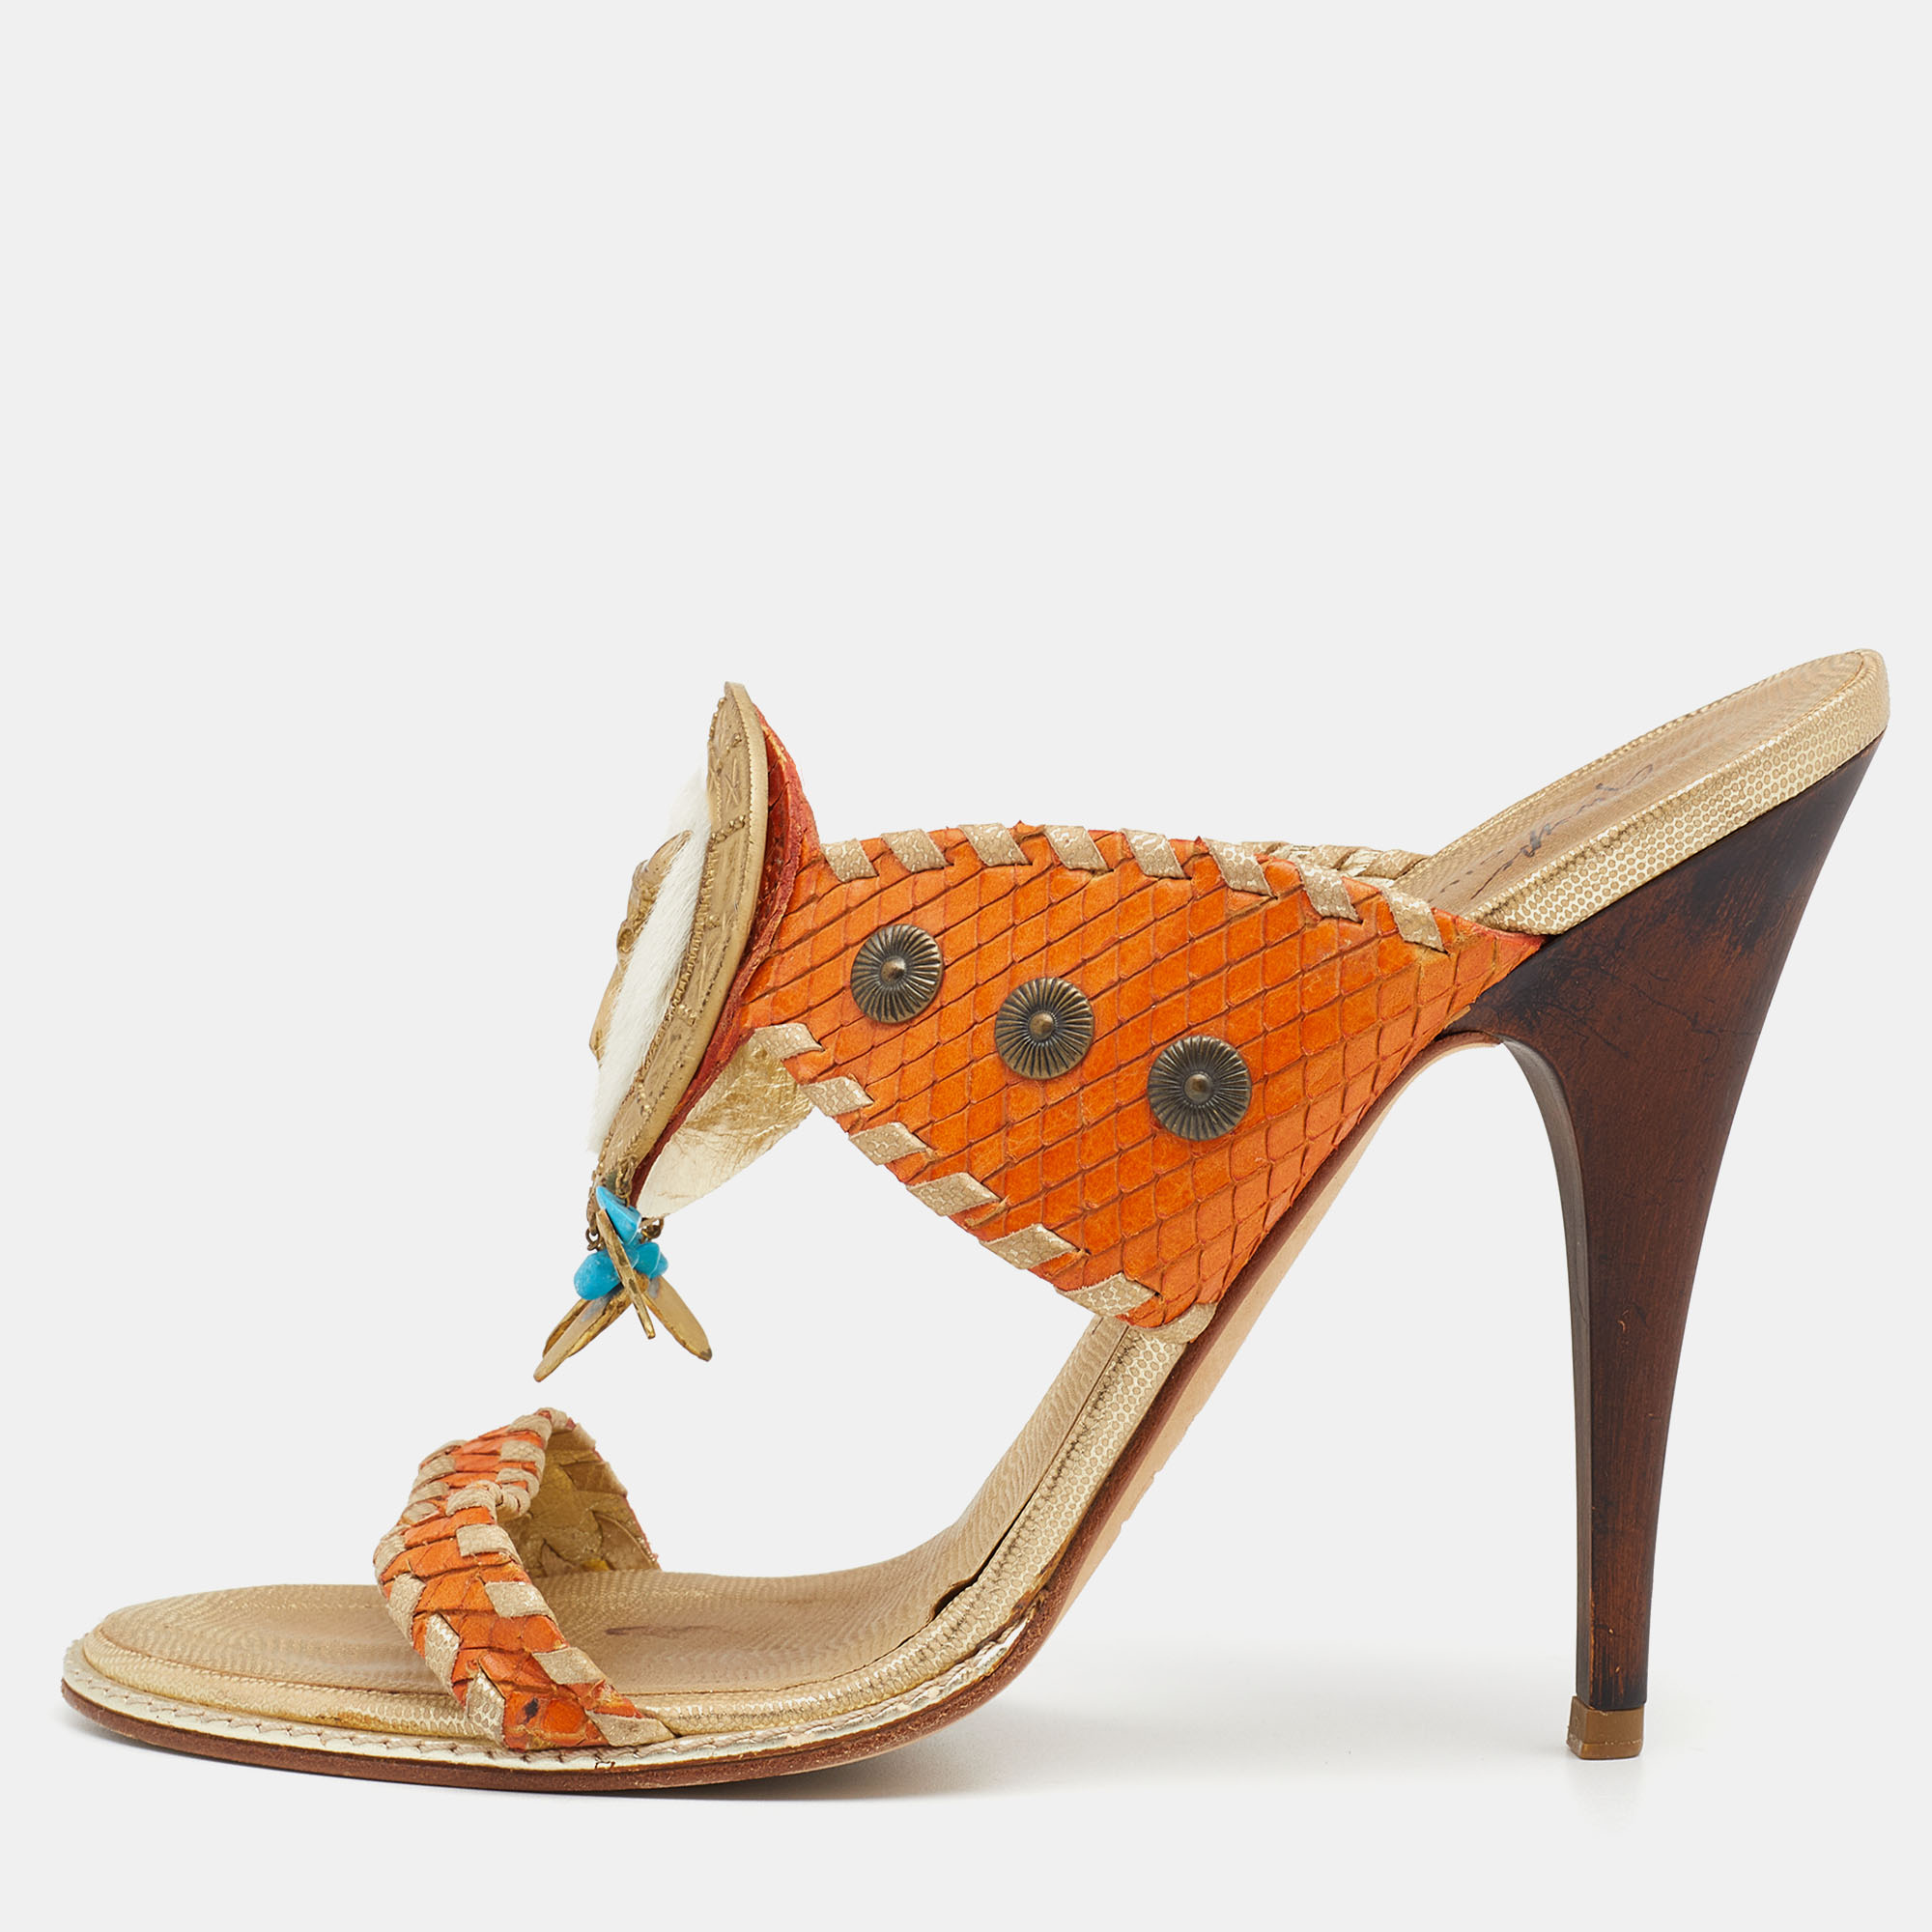 Giuseppe zanotti orange/gold python embossed leather slides sandals 37